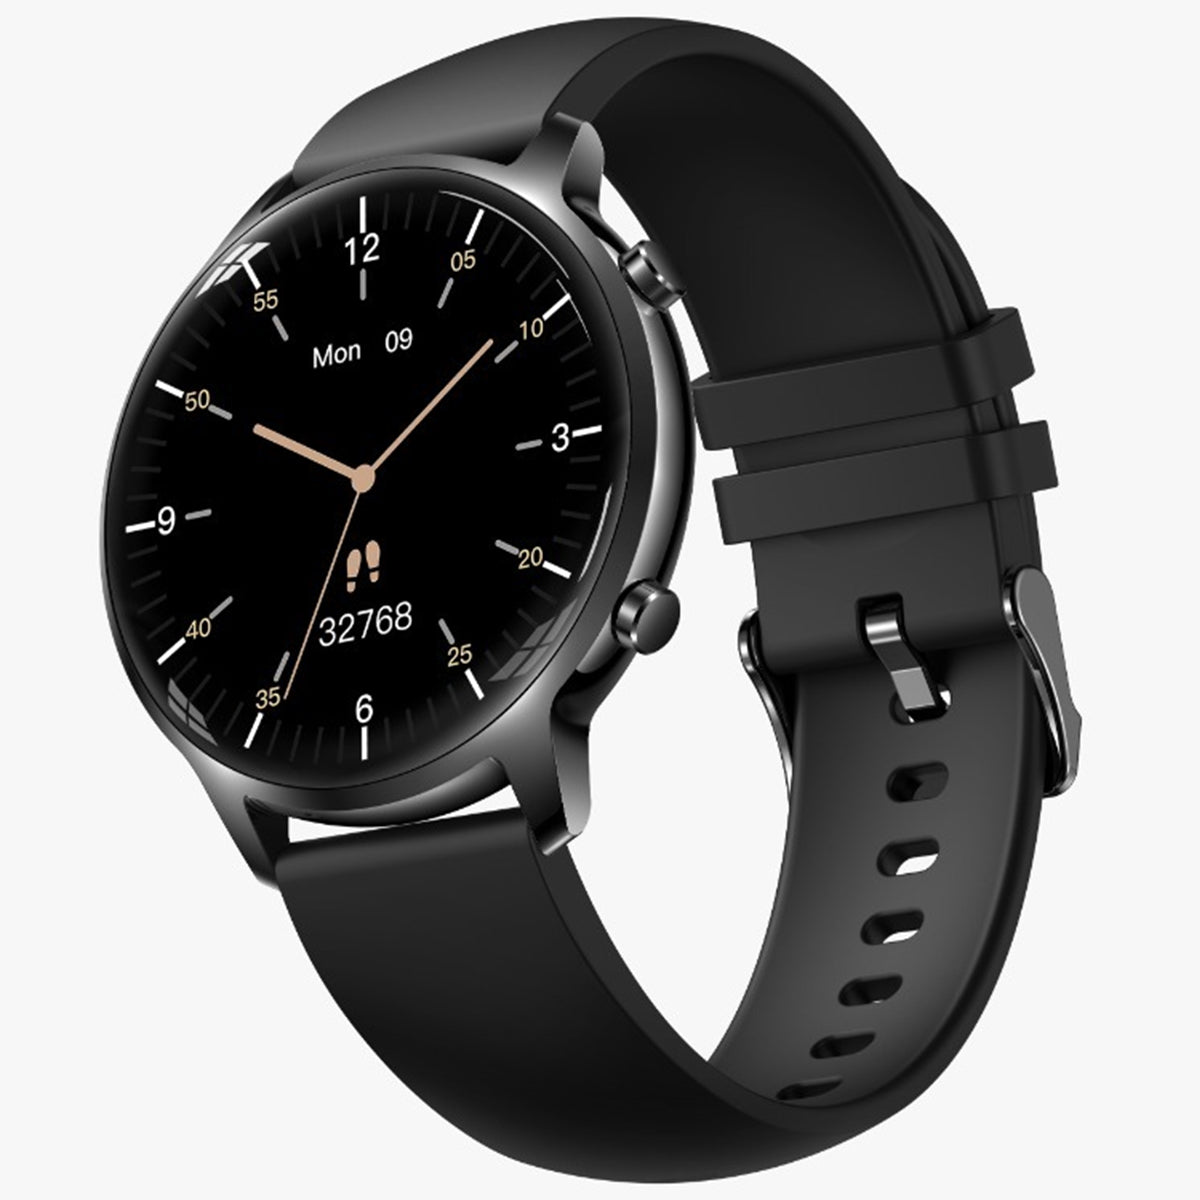 Fralugio Reloj Inteligente Smart Watch T18 De Lujo Para Dama